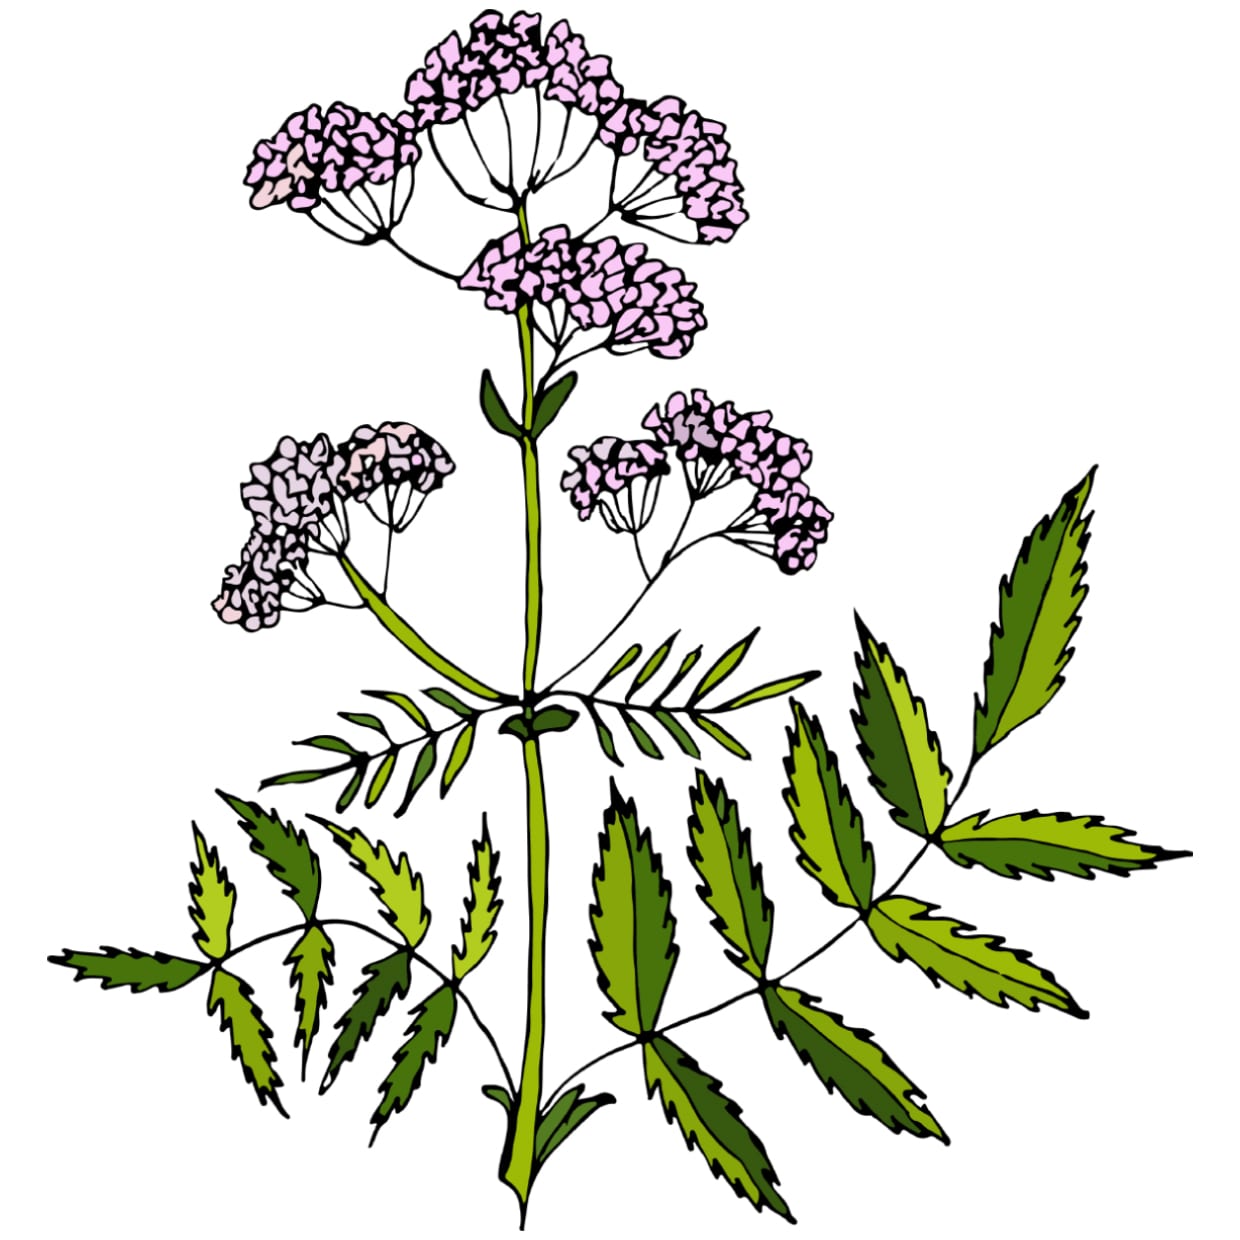 An illustration of a valerian plant.